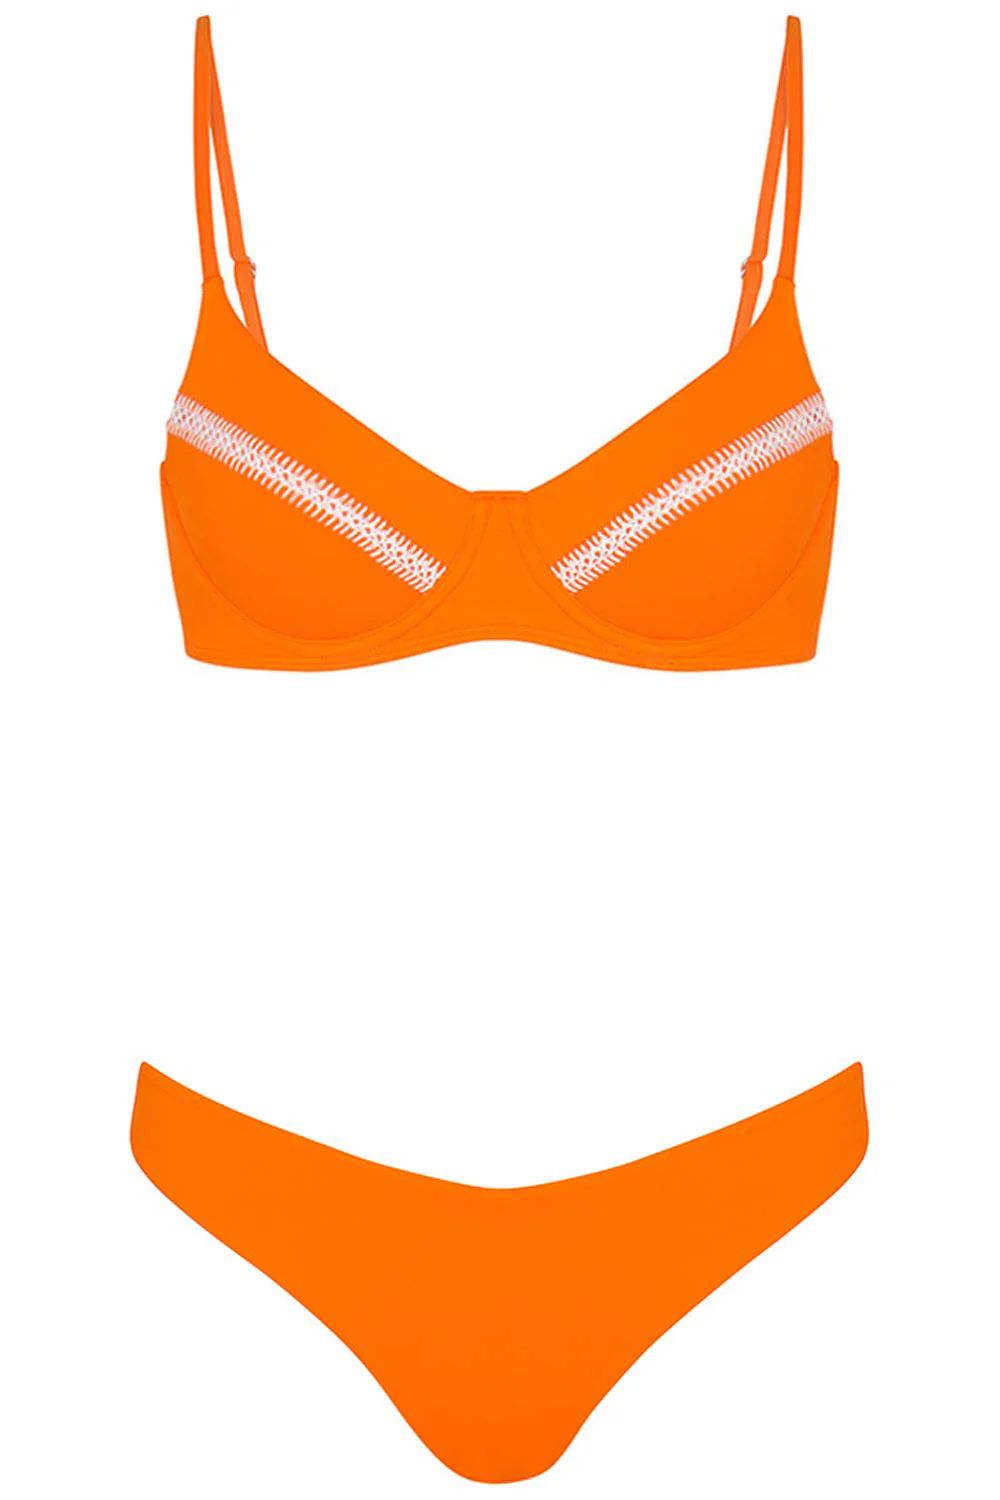 Destin Bikini Orange Set | VETCHY